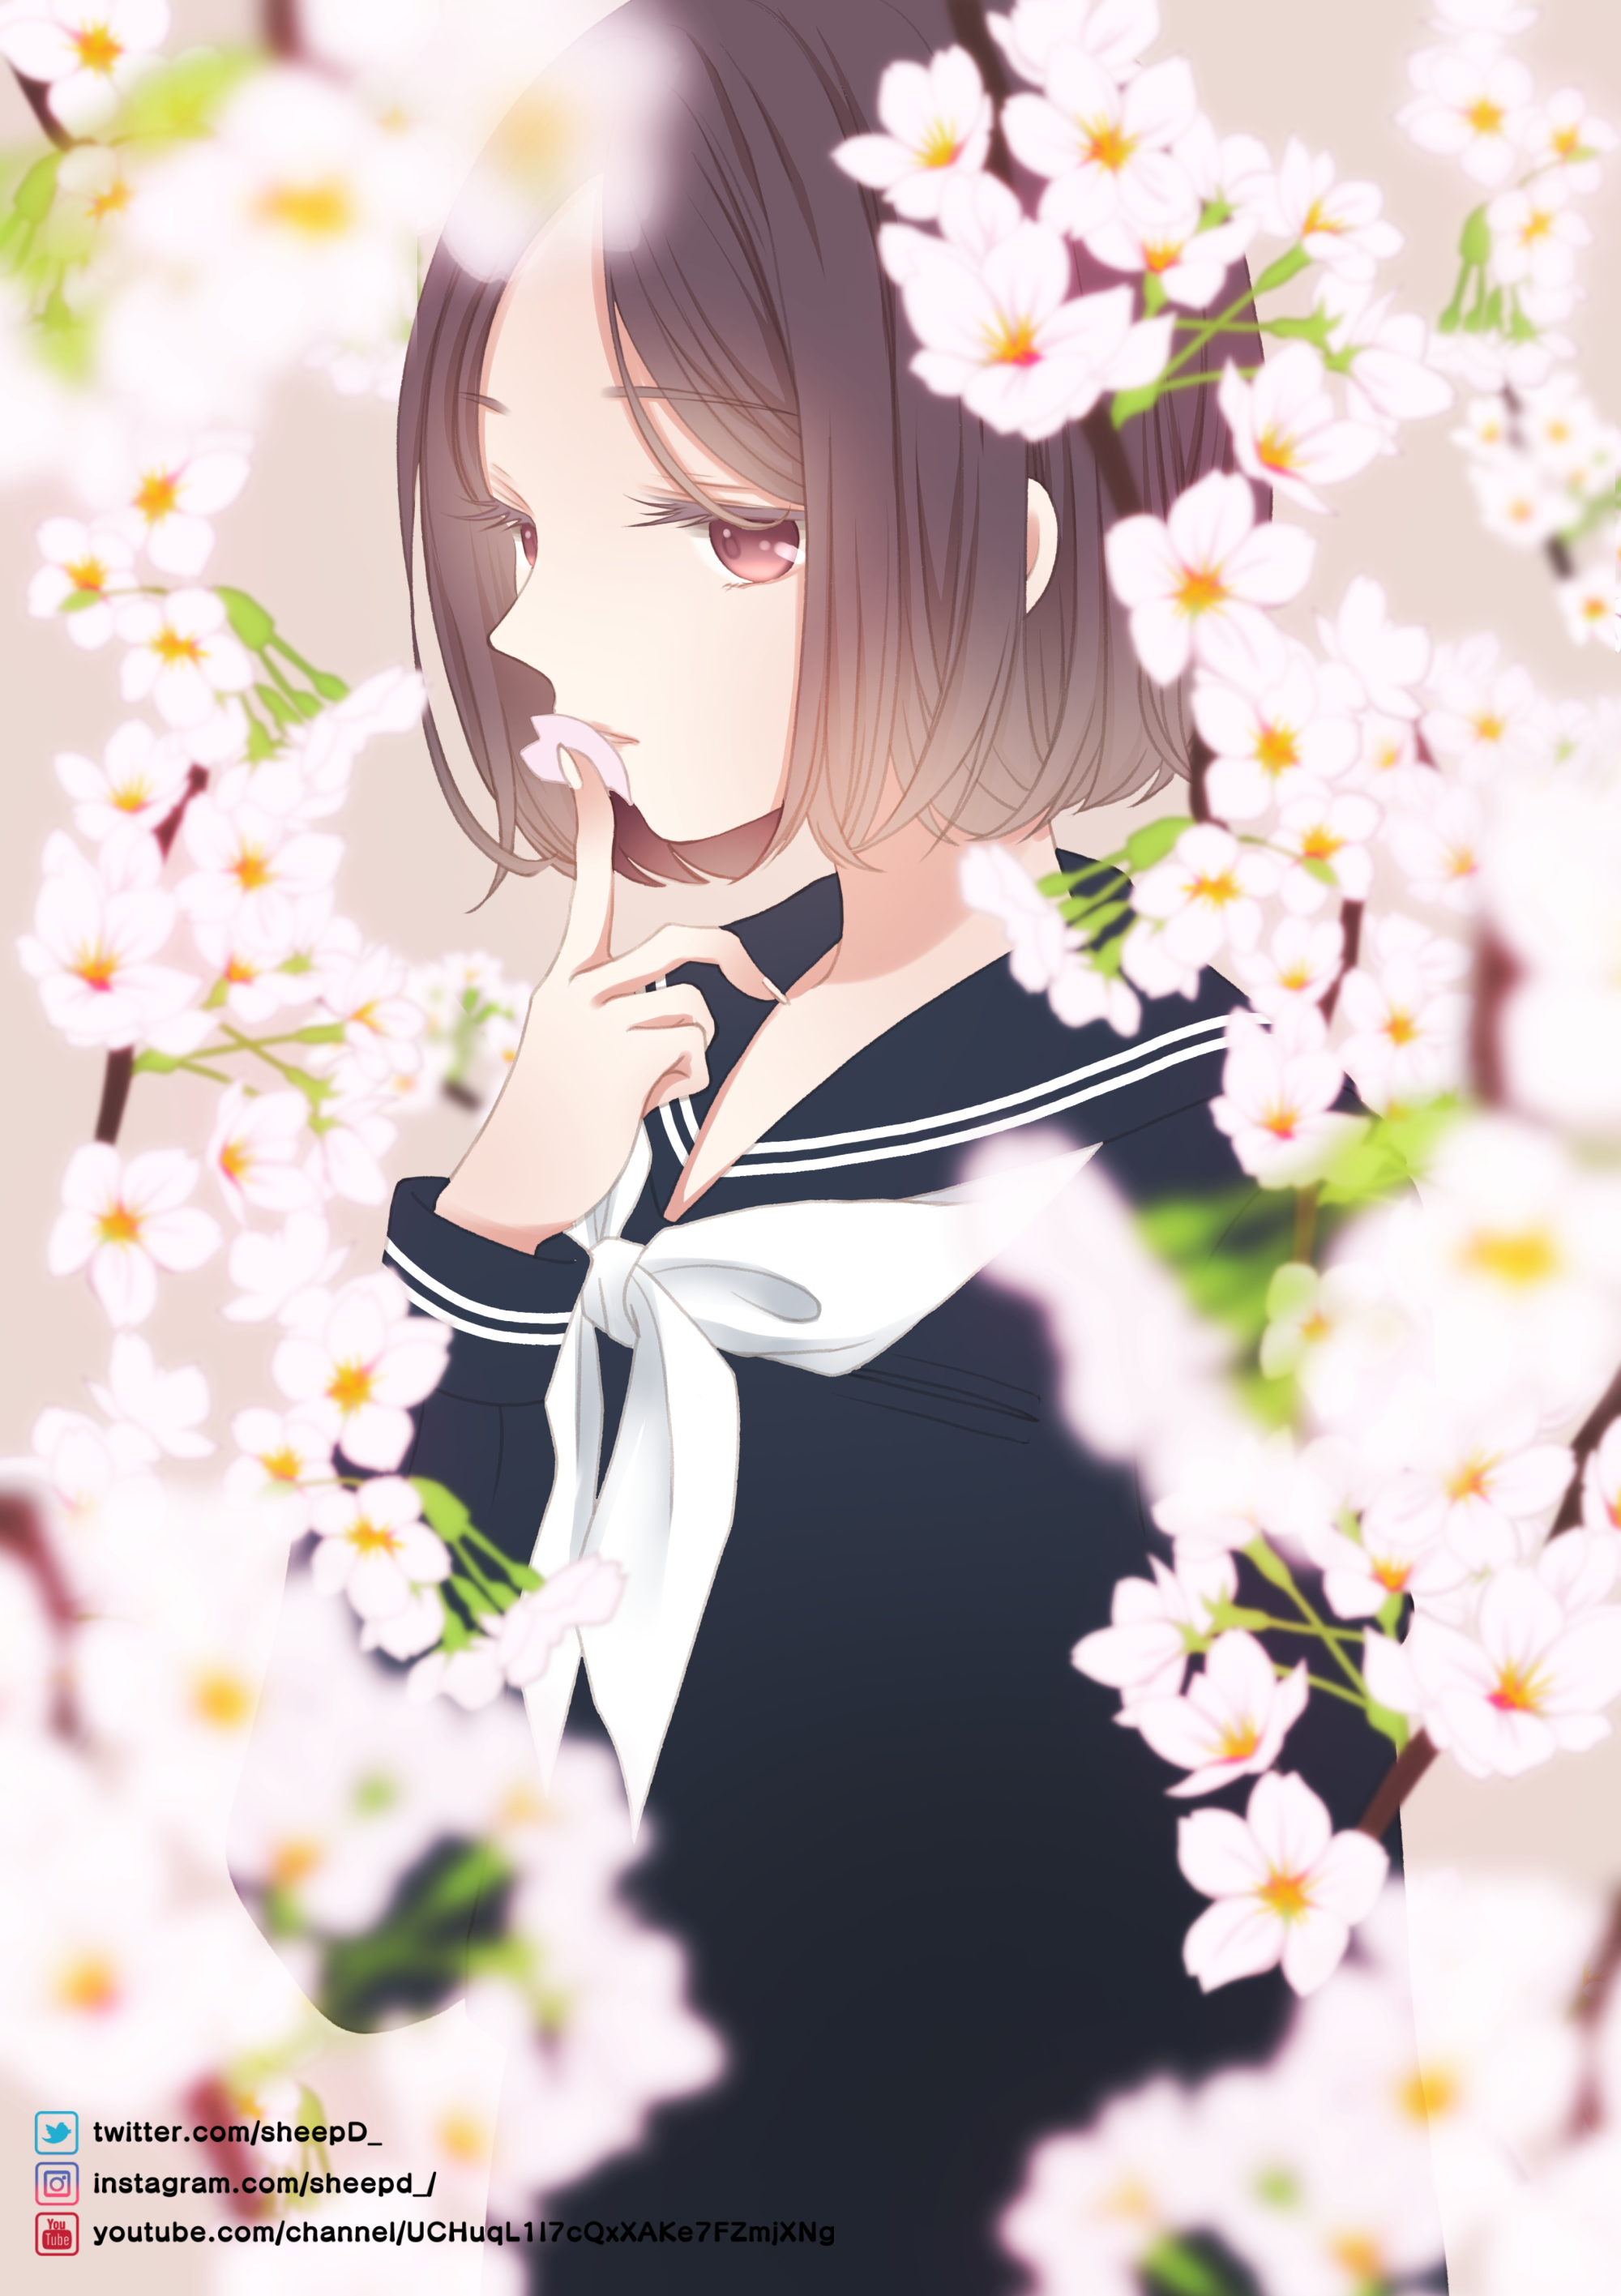 Anime 2000x2833 anime anime girls digital art artwork 2D portrait display Sheepd cherry blossom brown eyes brunette short hair school uniform